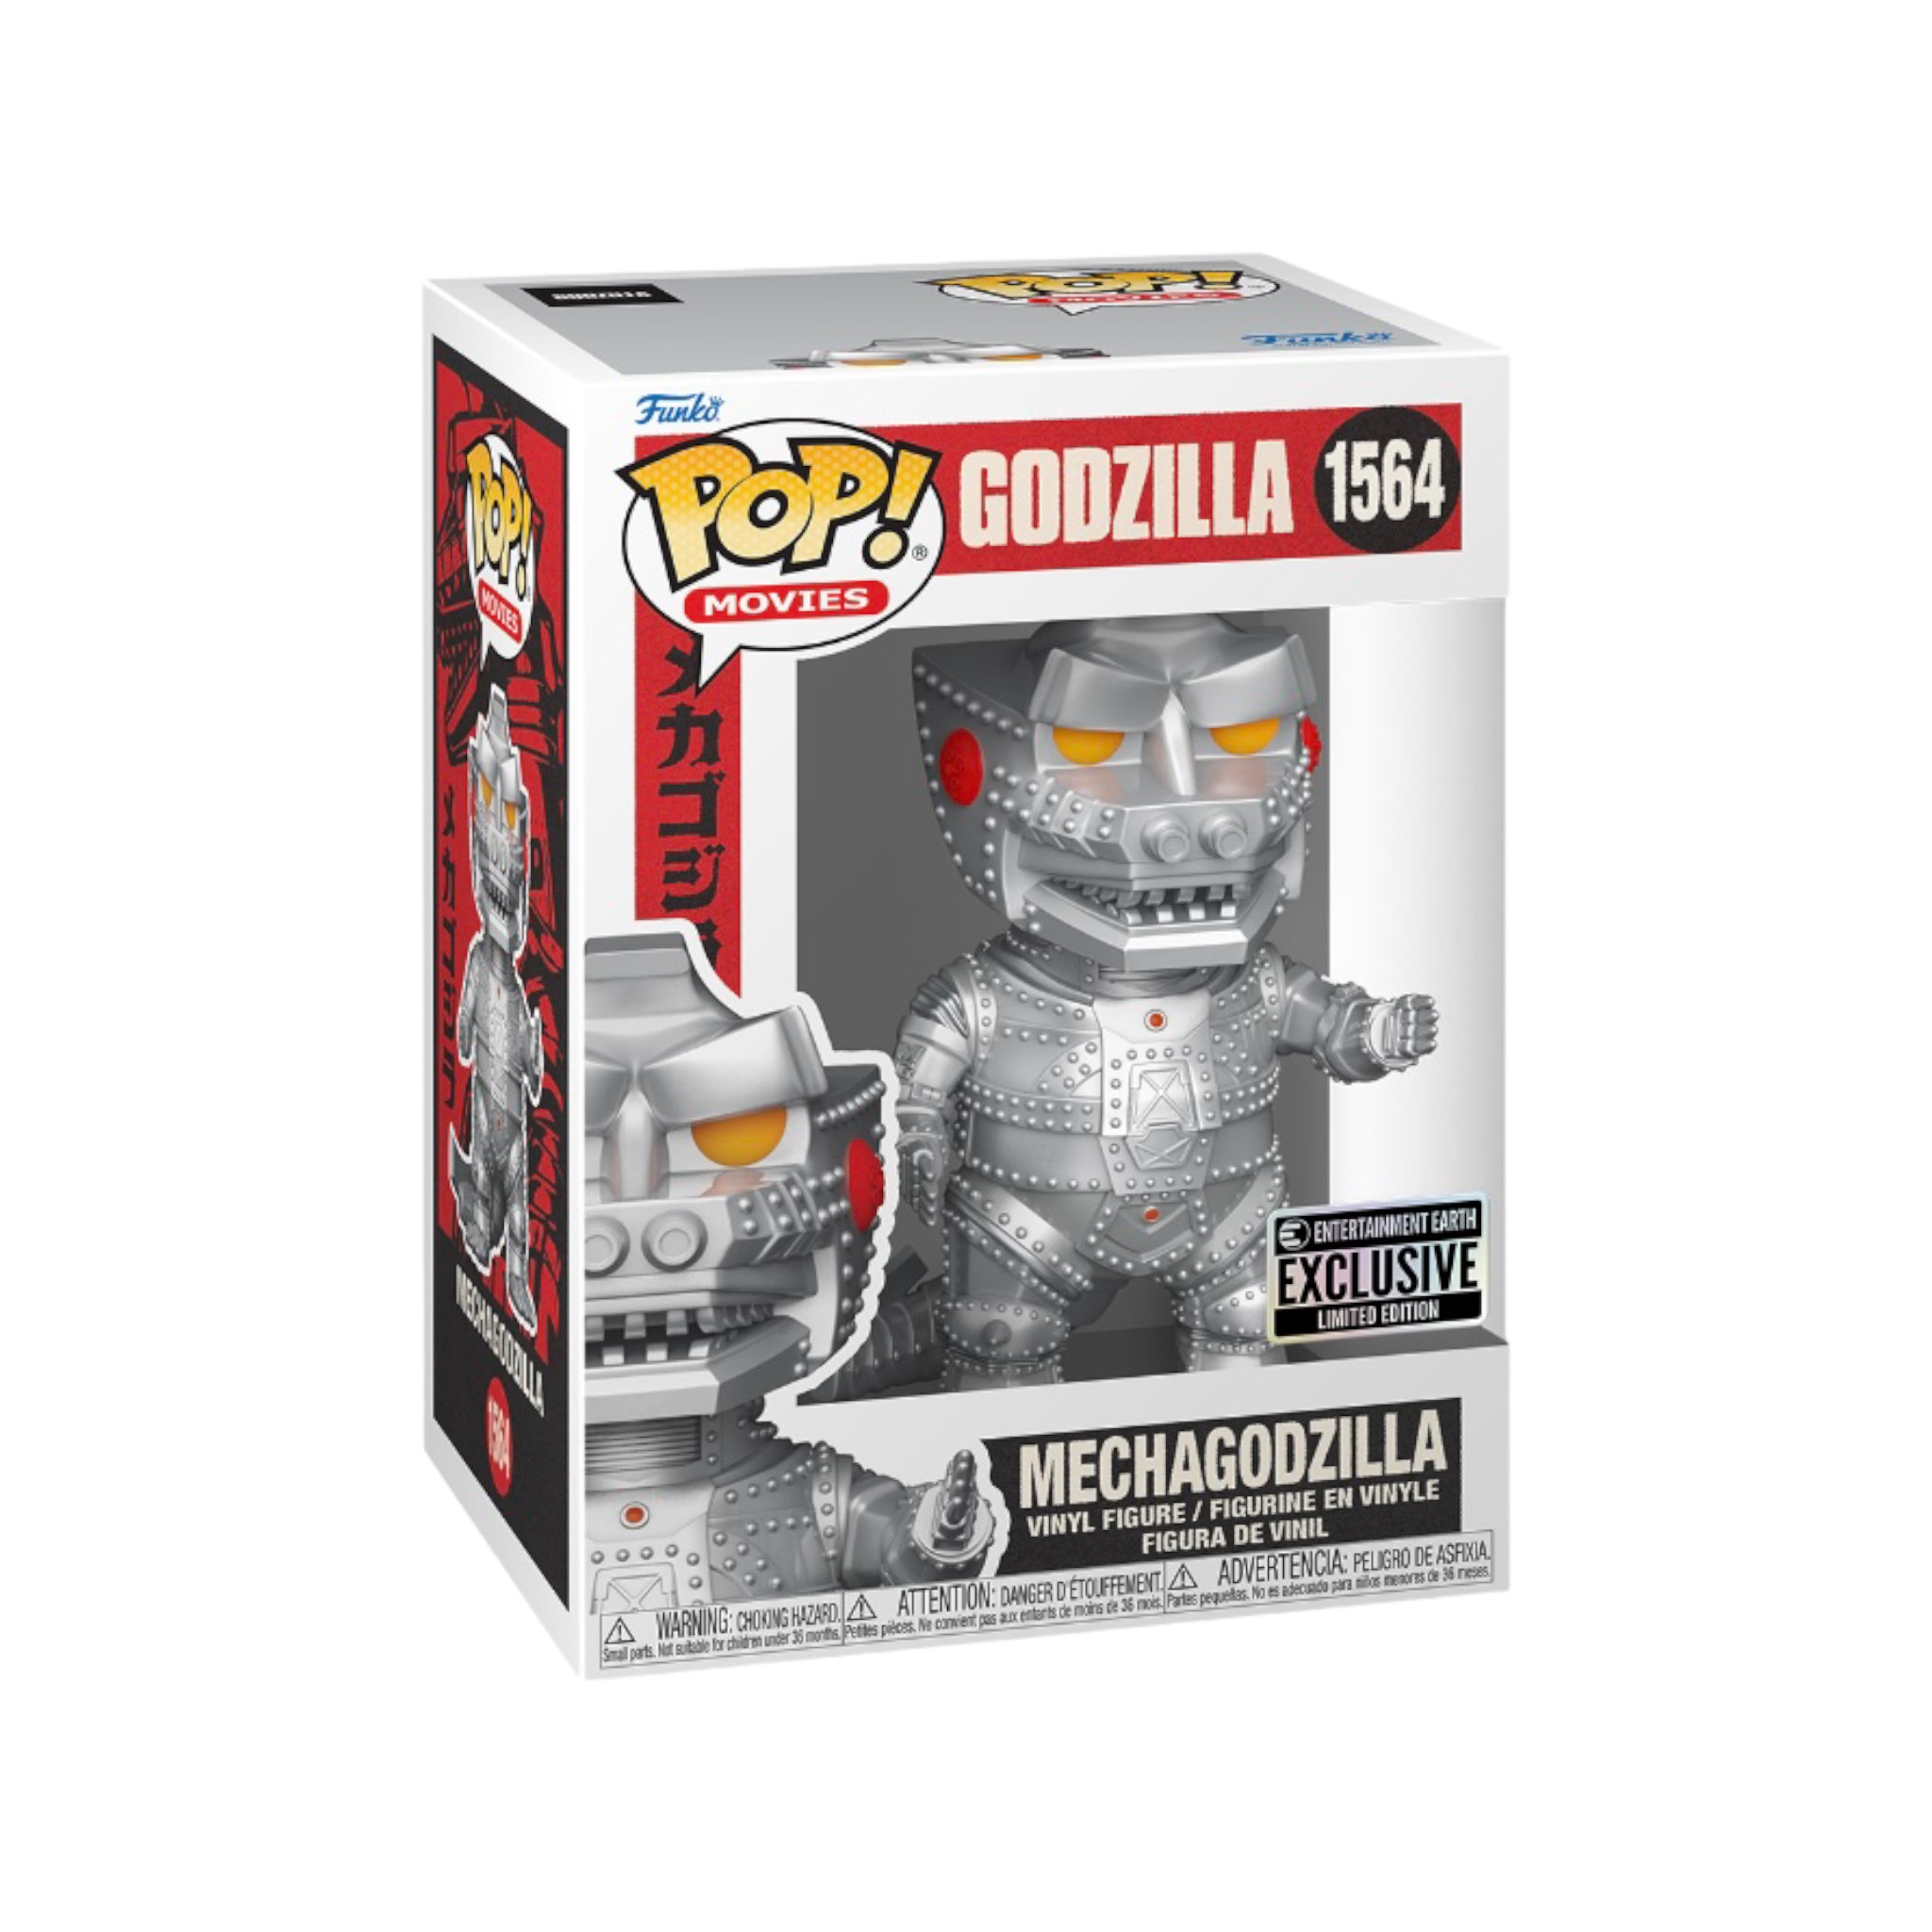 Mechagodzilla #1564 Funko Pop! - Godzilla - Entertainment Earth Exclusive